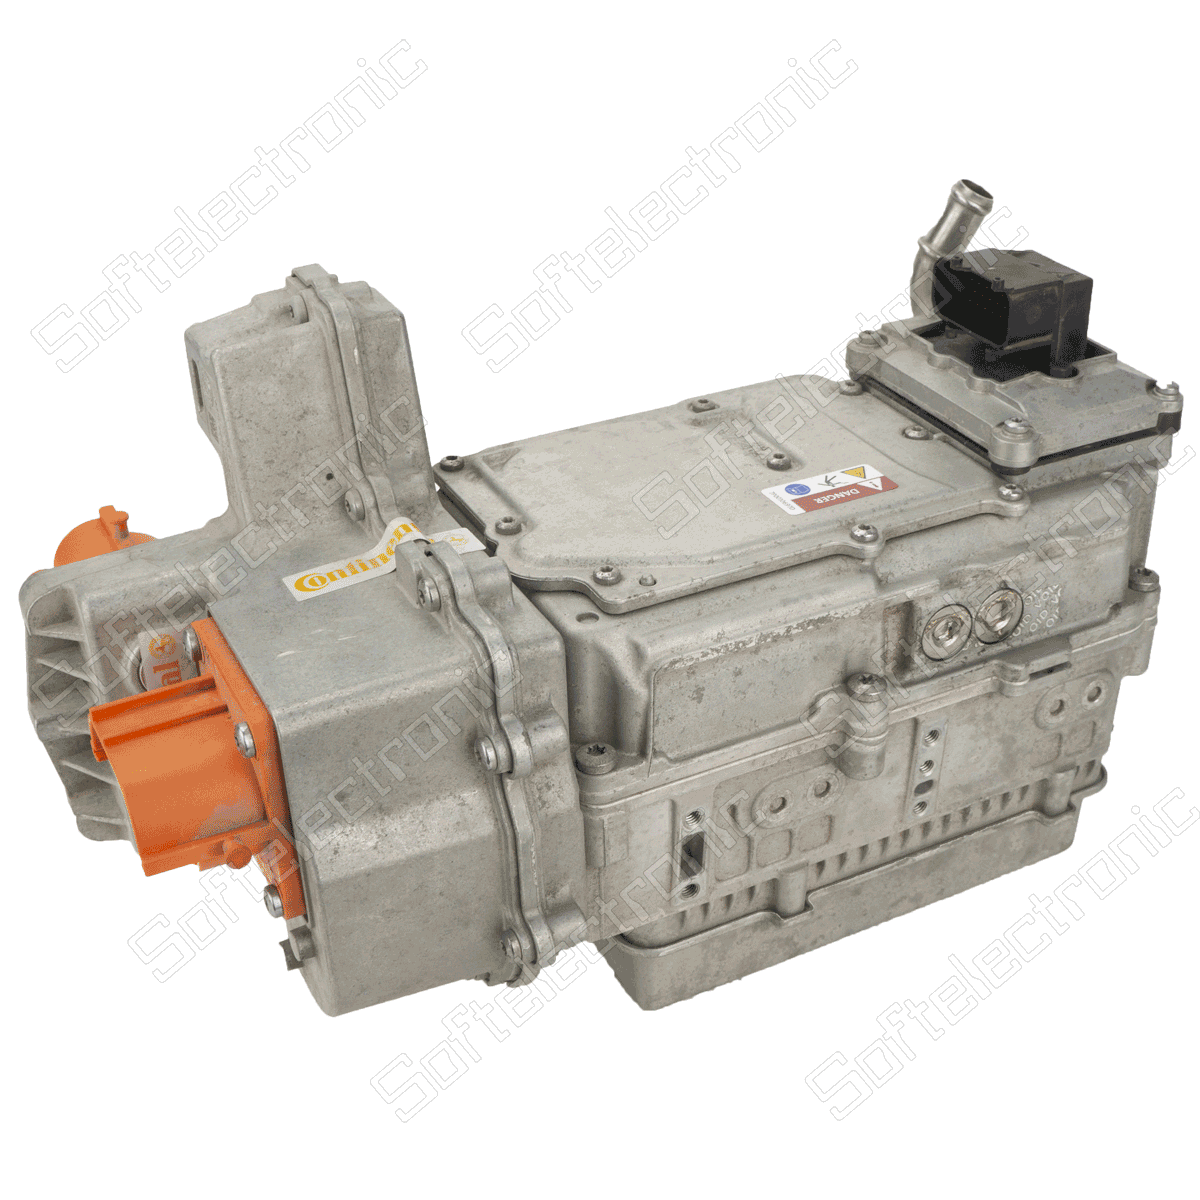 Repair of power inverter hybrid high voltage battery Range Rover